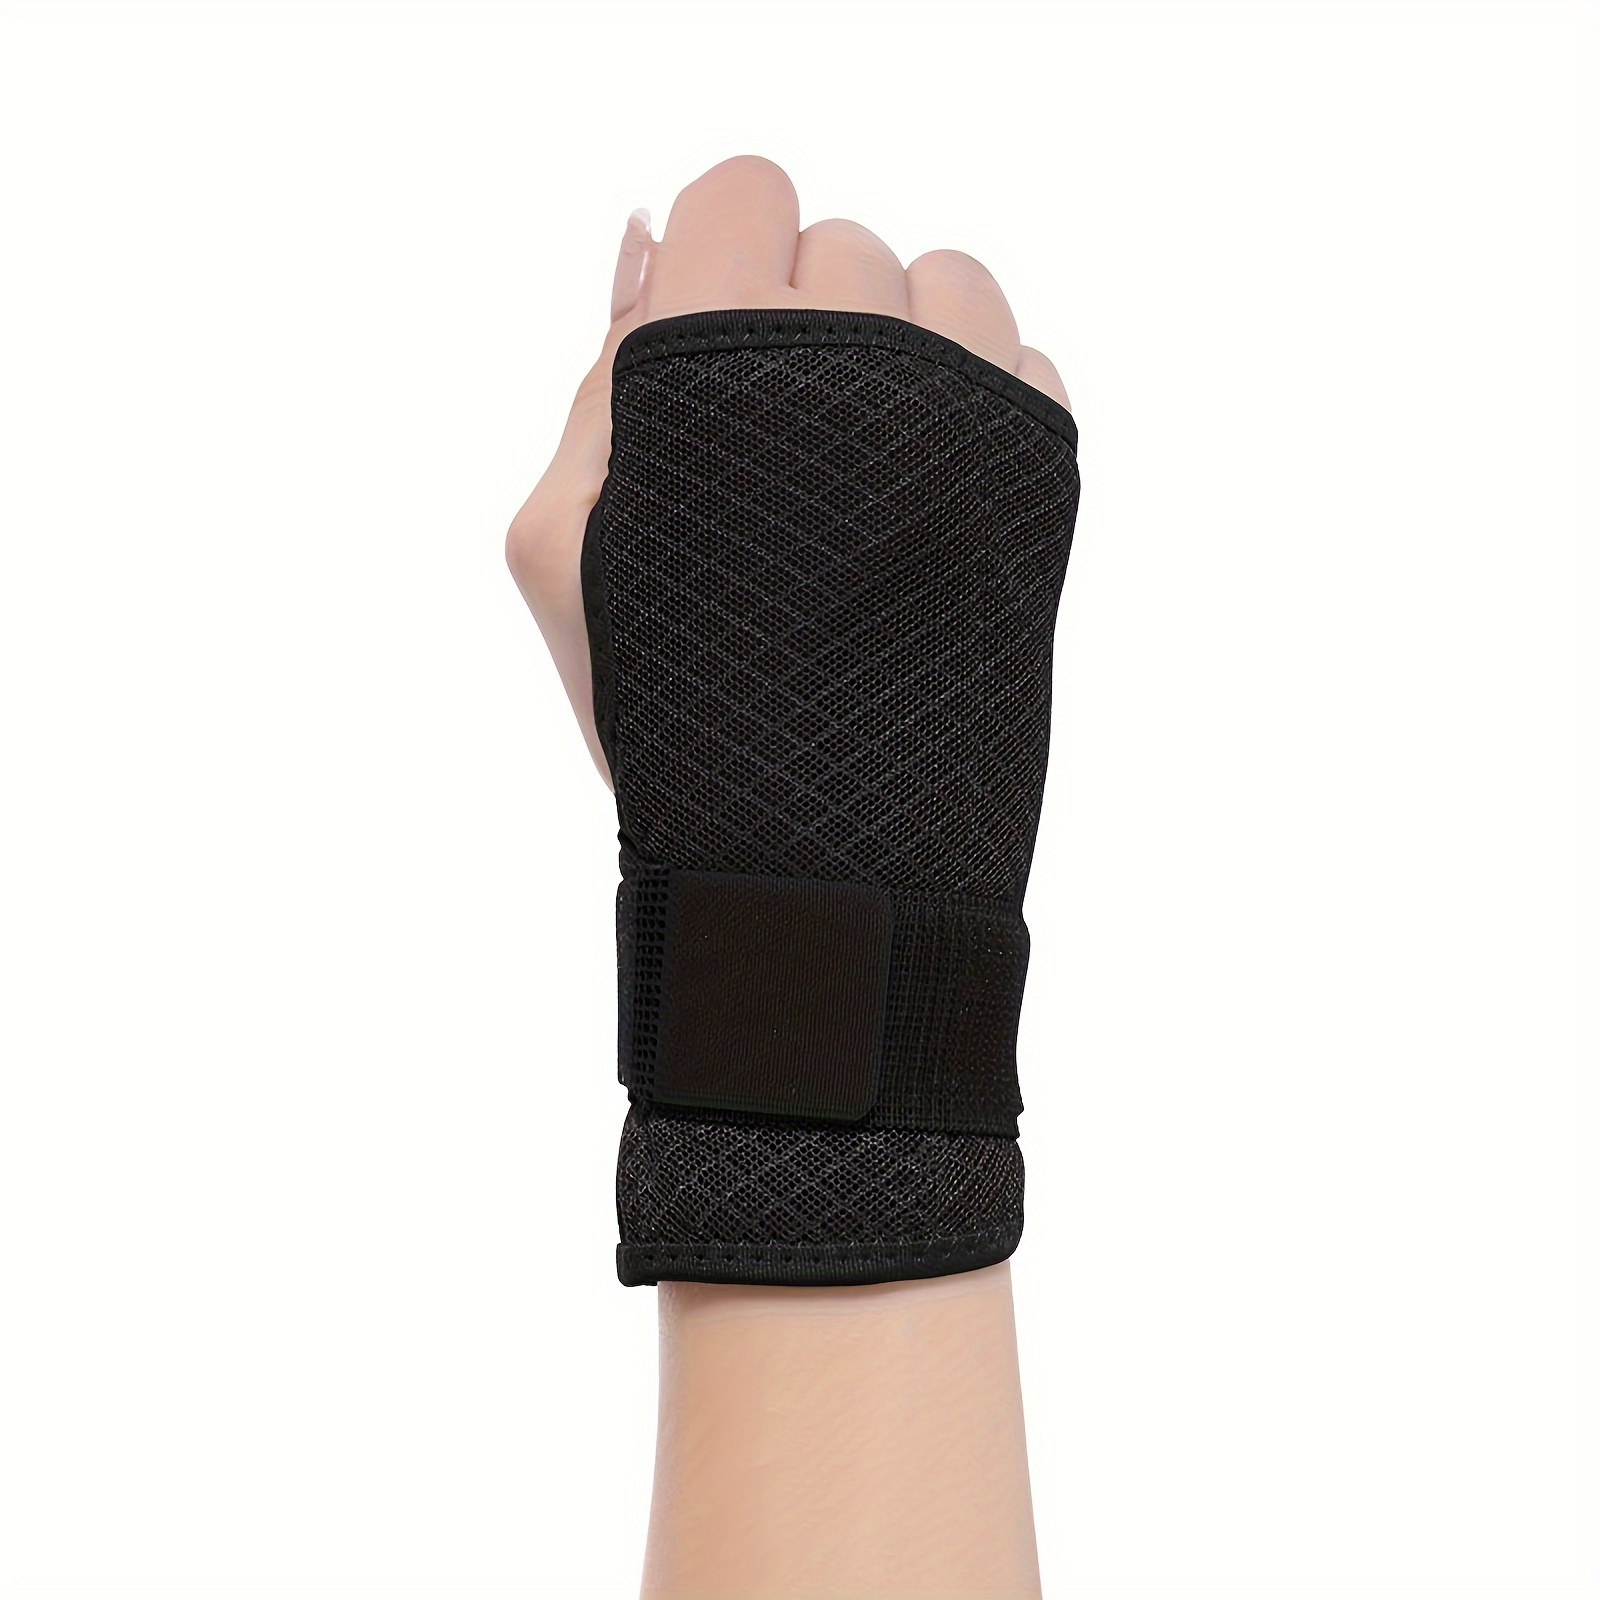 Comfy Brace-Premium Lined Adjustable Wrist Support/Compression